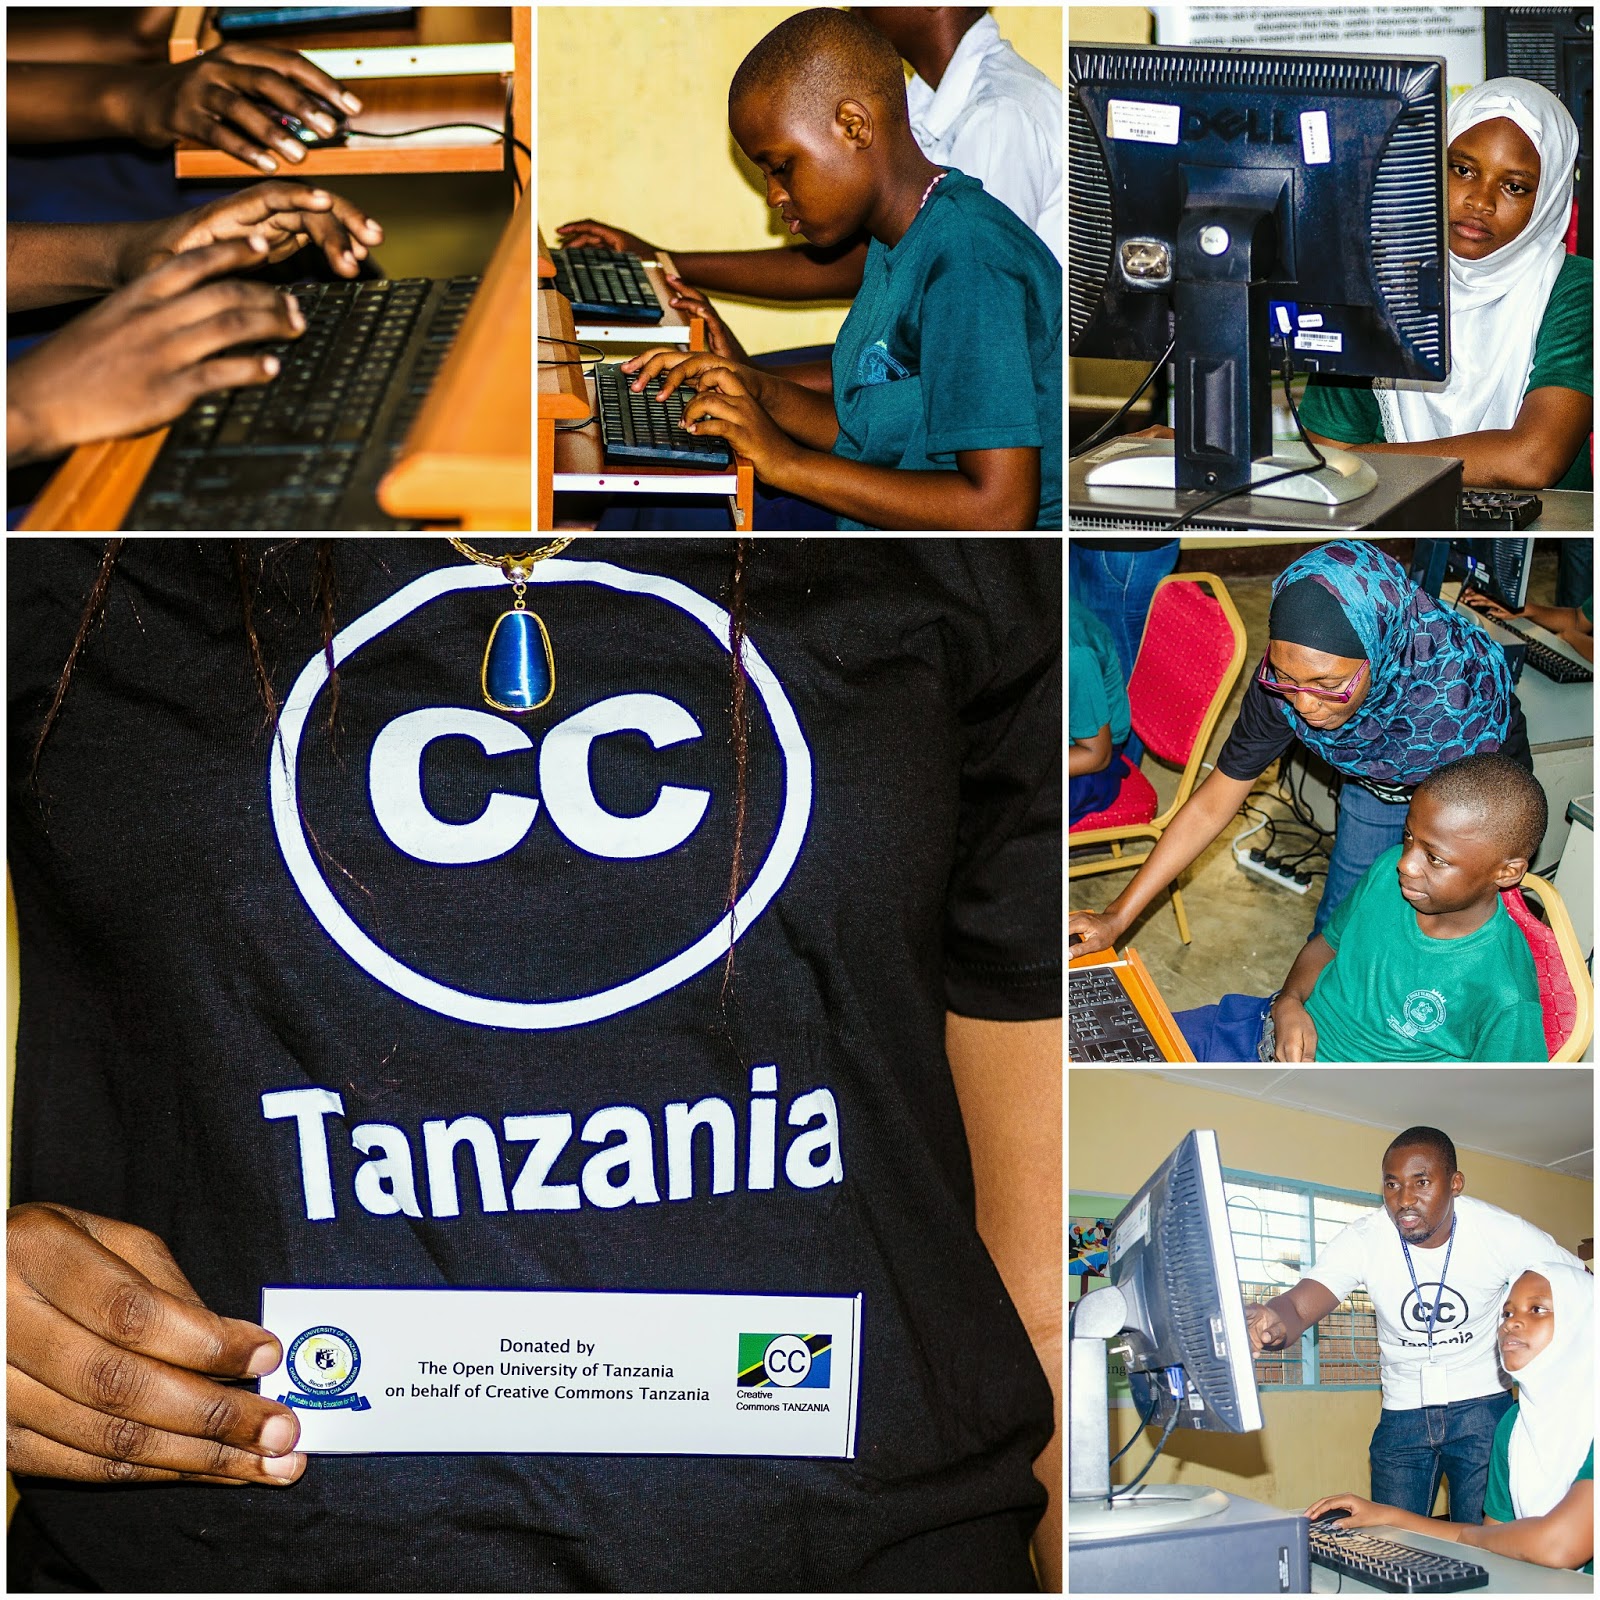 Cc Tanzania